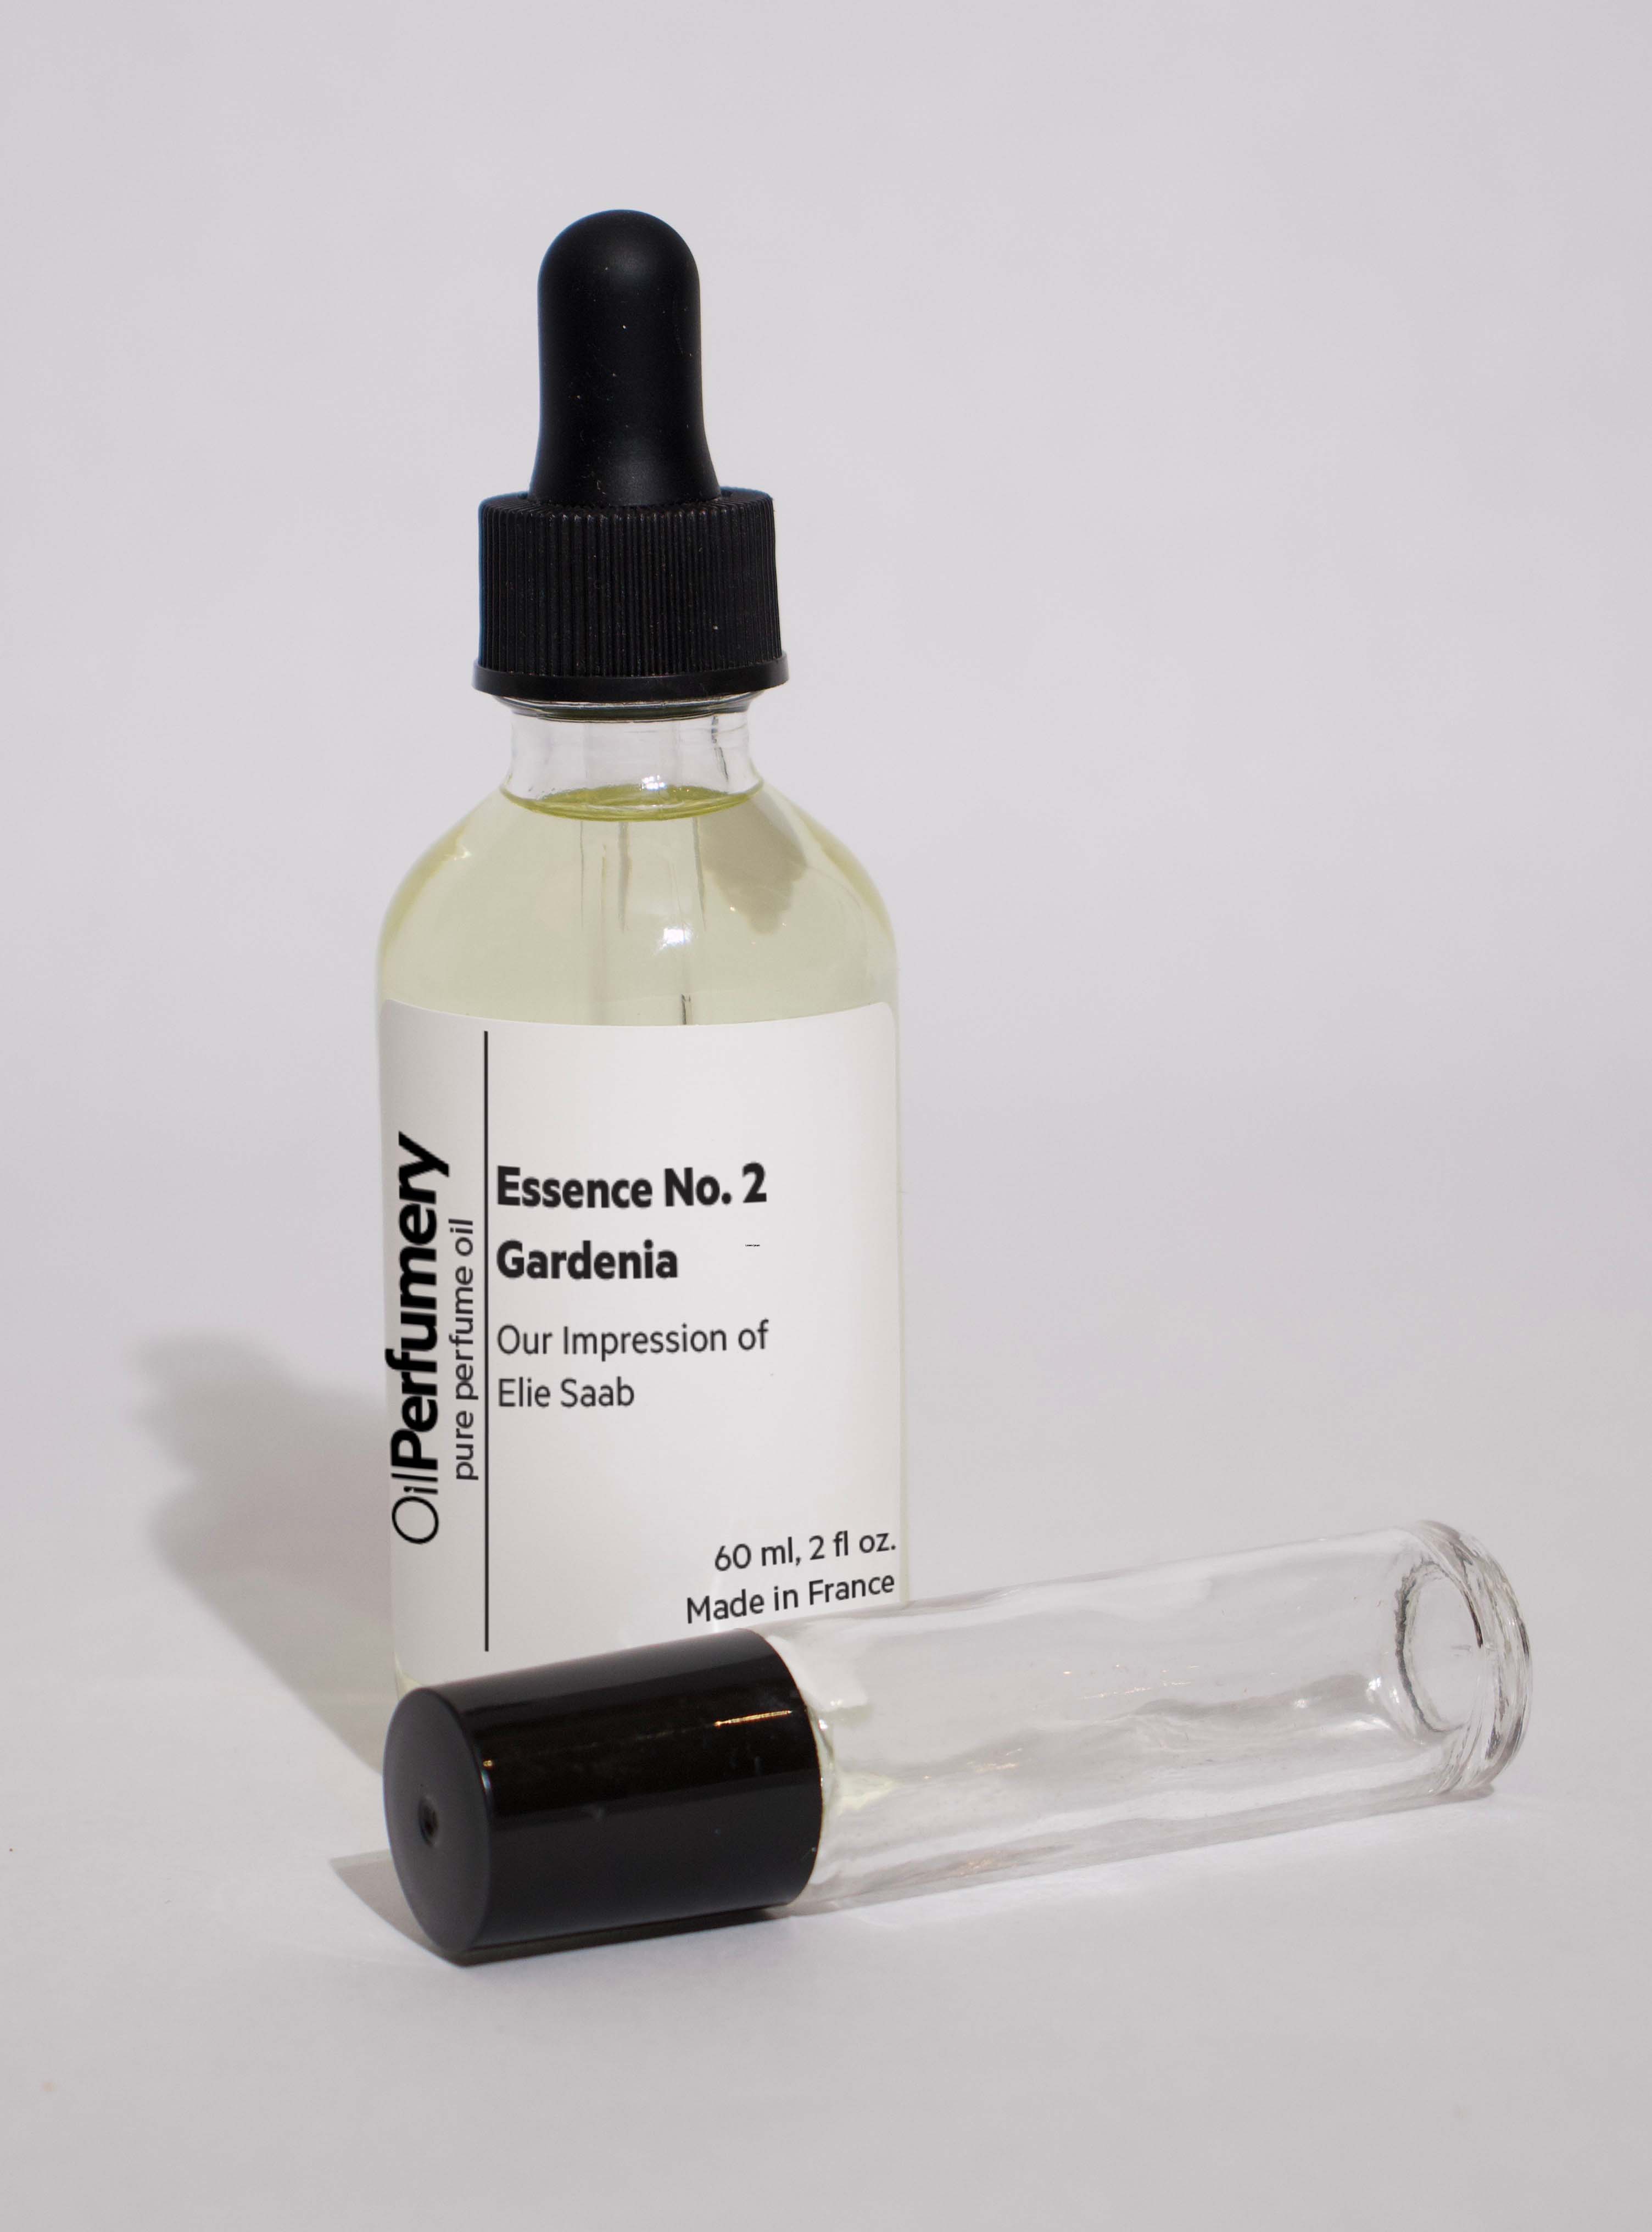 Oil Perfumery Impression of Elie Saab - Essence No. 2 Gardenia